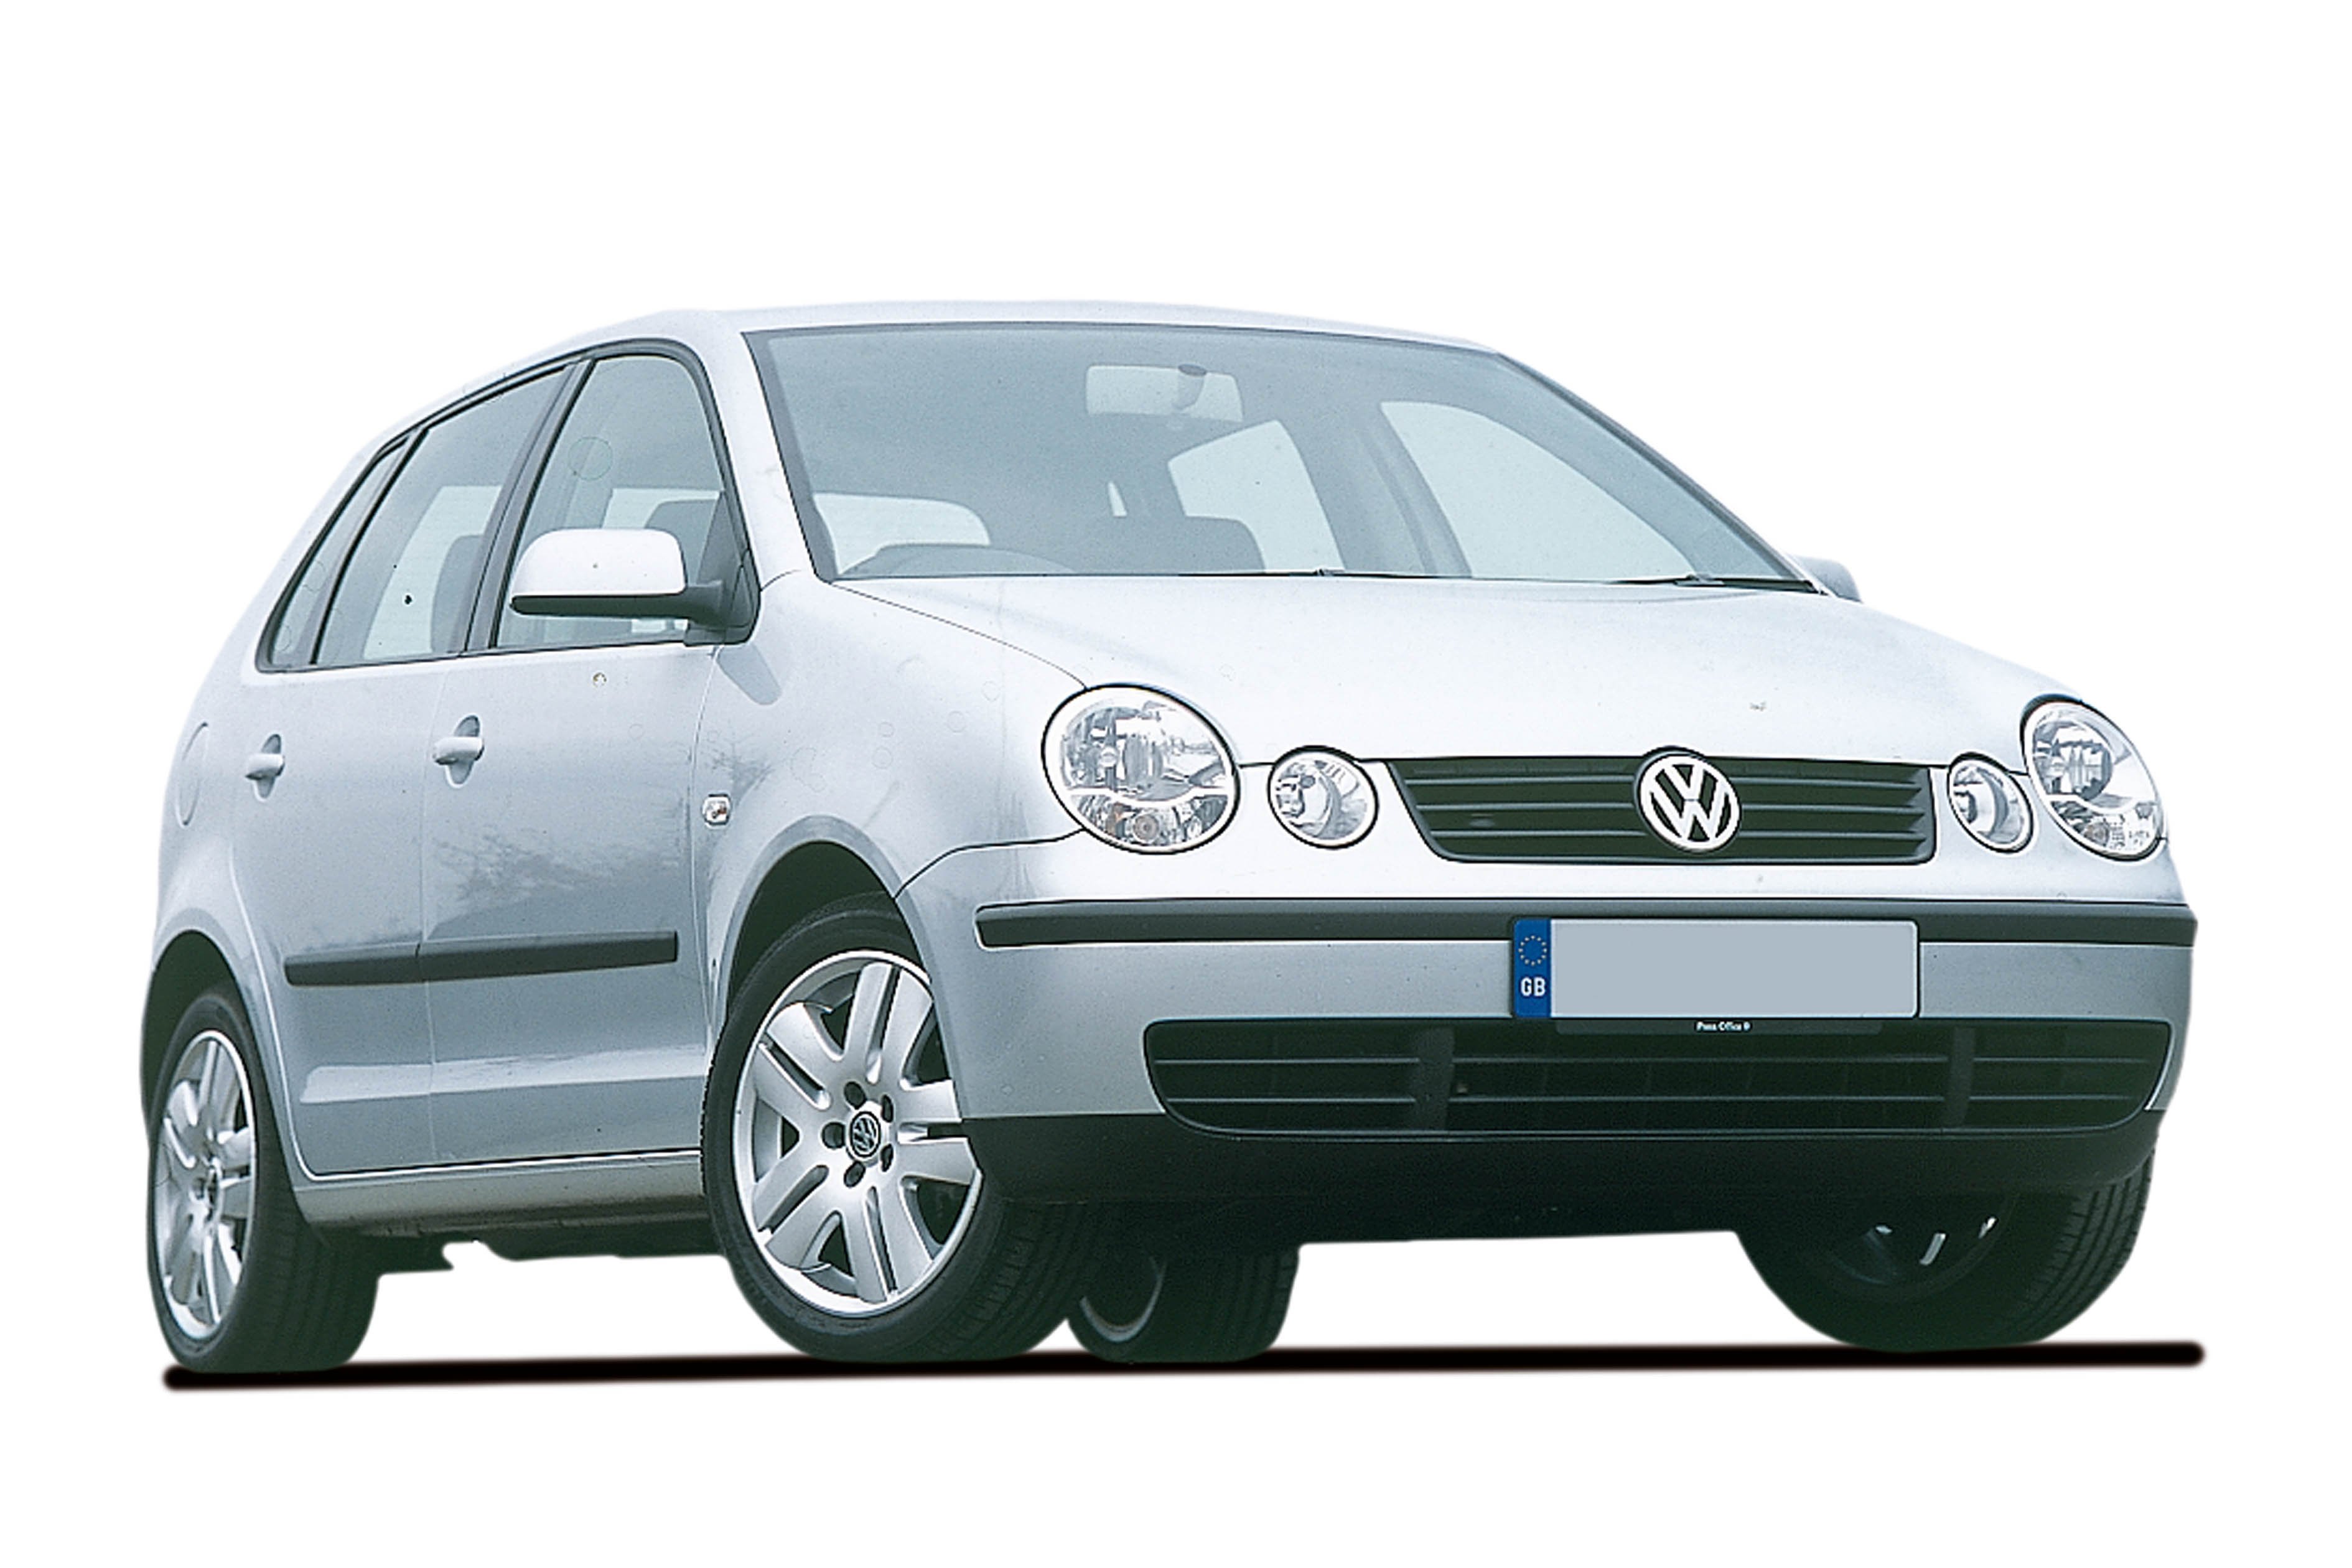 Фольксваген поло 4 хэтчбек. VW Polo 4. Volkswagen Polo хэтчбек 2001. Фольксваген поло 2001-2005.